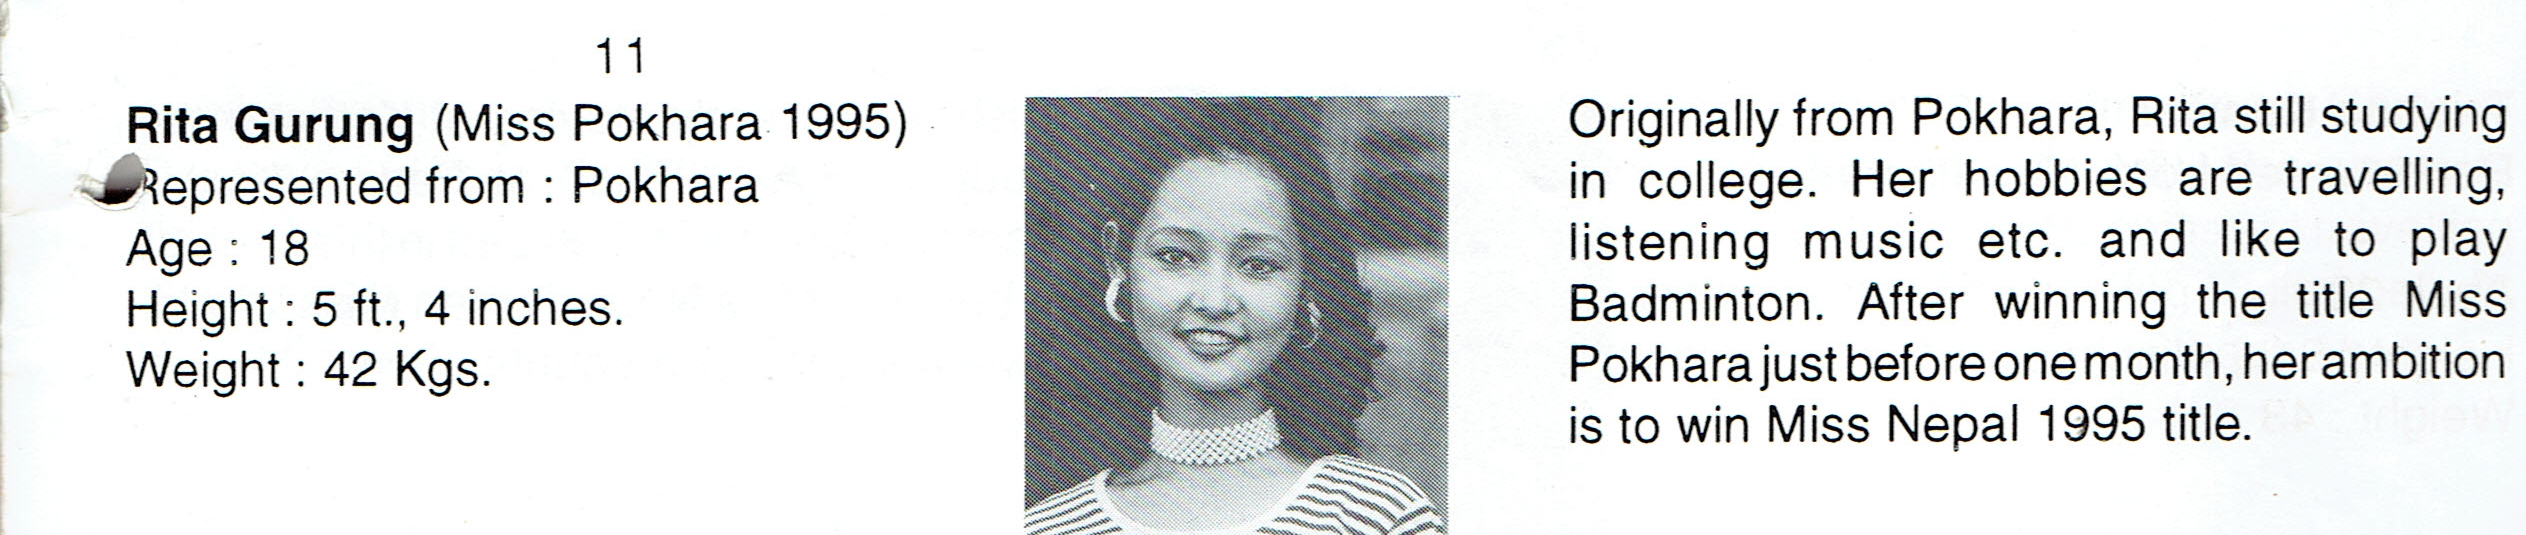 Rita Gurung